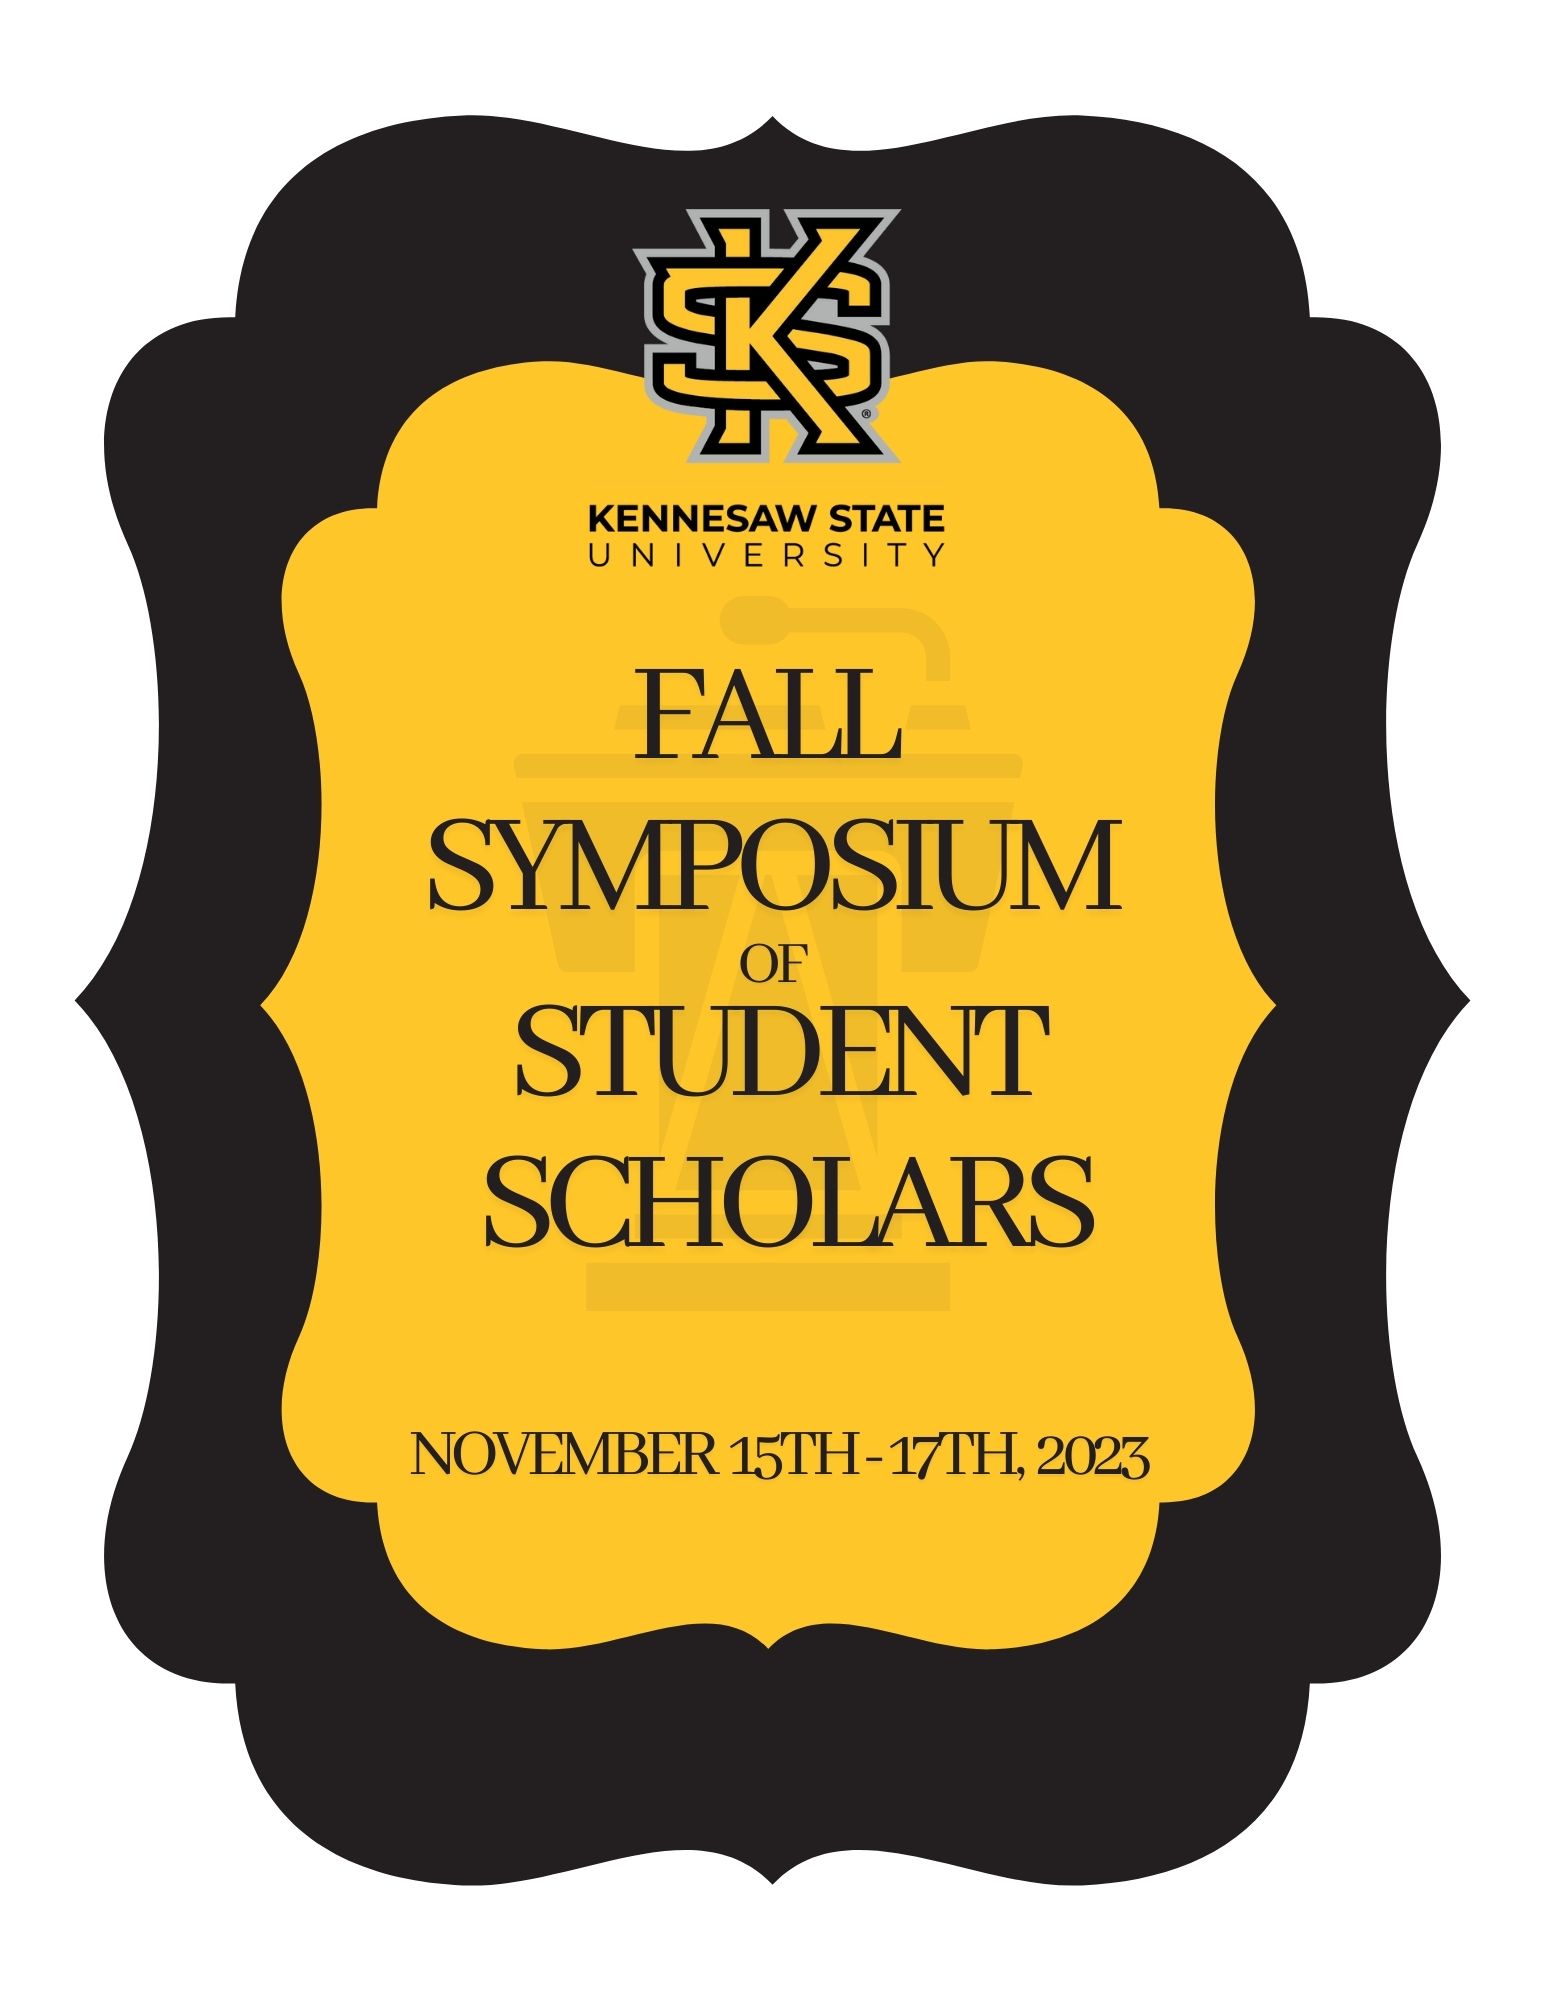 /our/symposium-student-scholars/images/Fall%2023%20Symposium%20Website%20Graphic.jpg